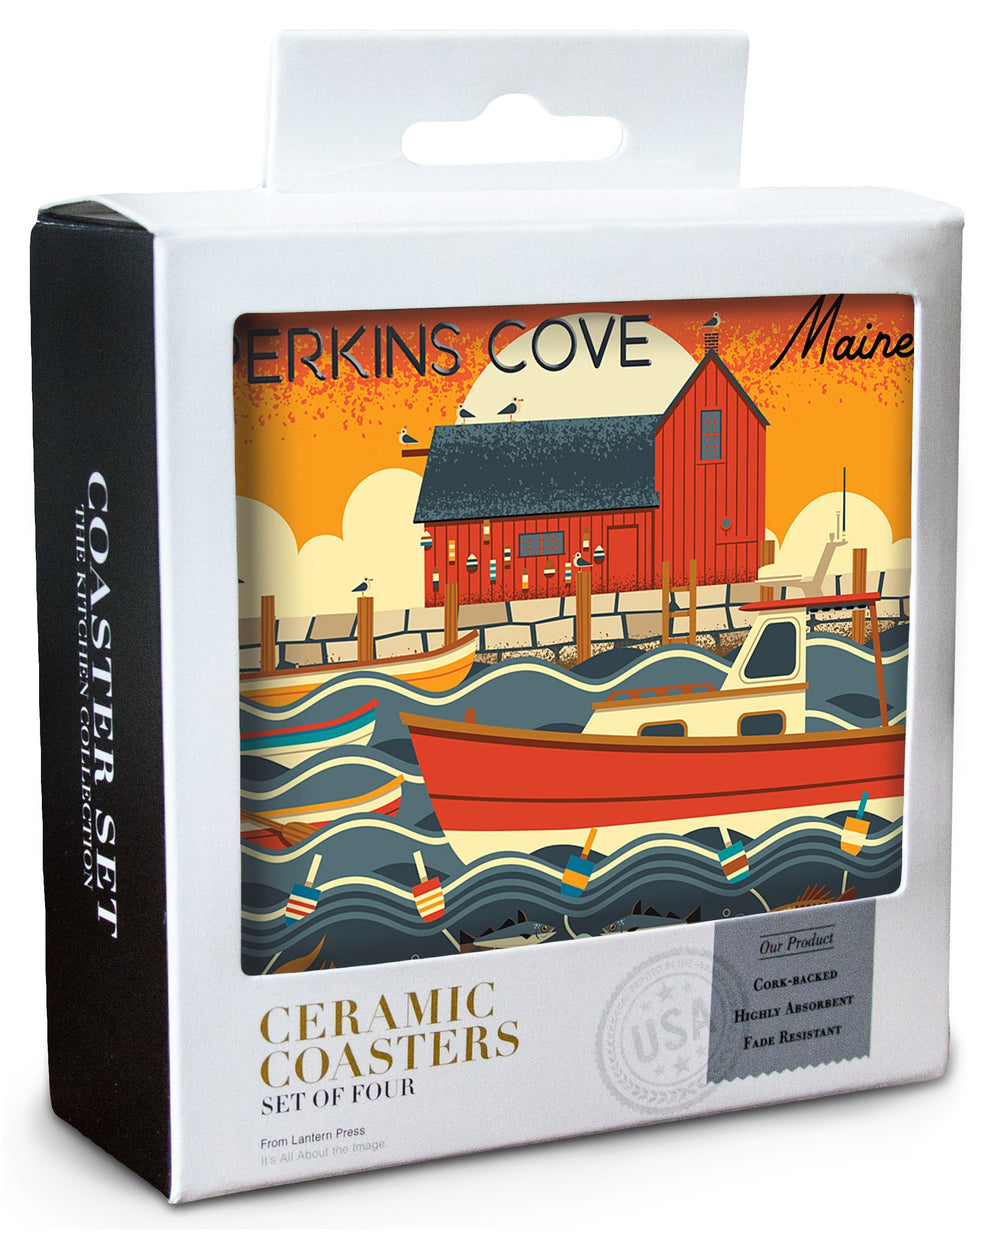 Perkins Cove, Maine, Nautical Geometric, Lantern Press Artwork, Coaster Set Coasters Lantern Press 